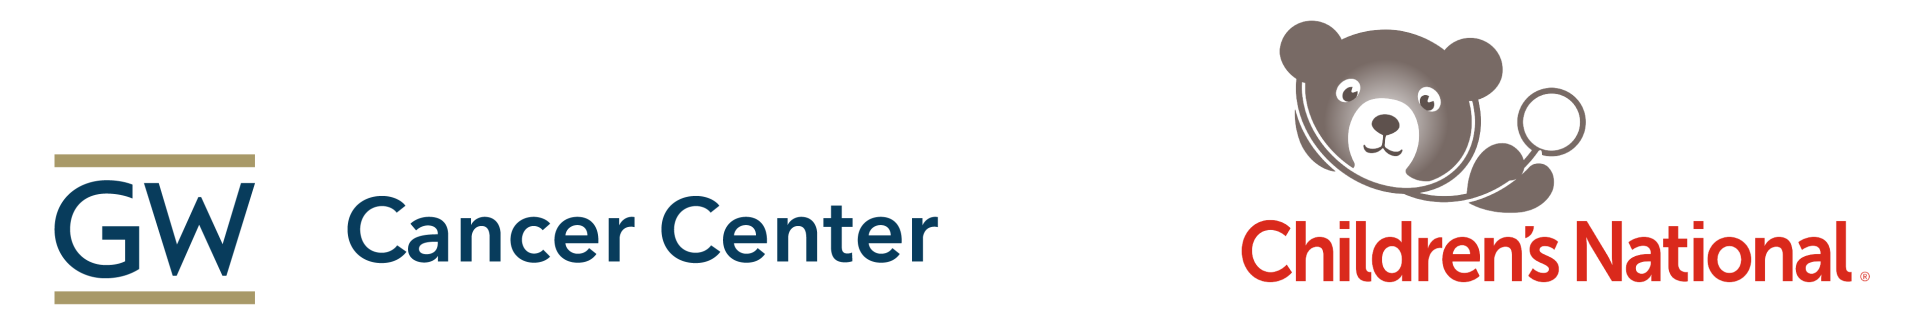 GW Cancer Center and Children's National logos